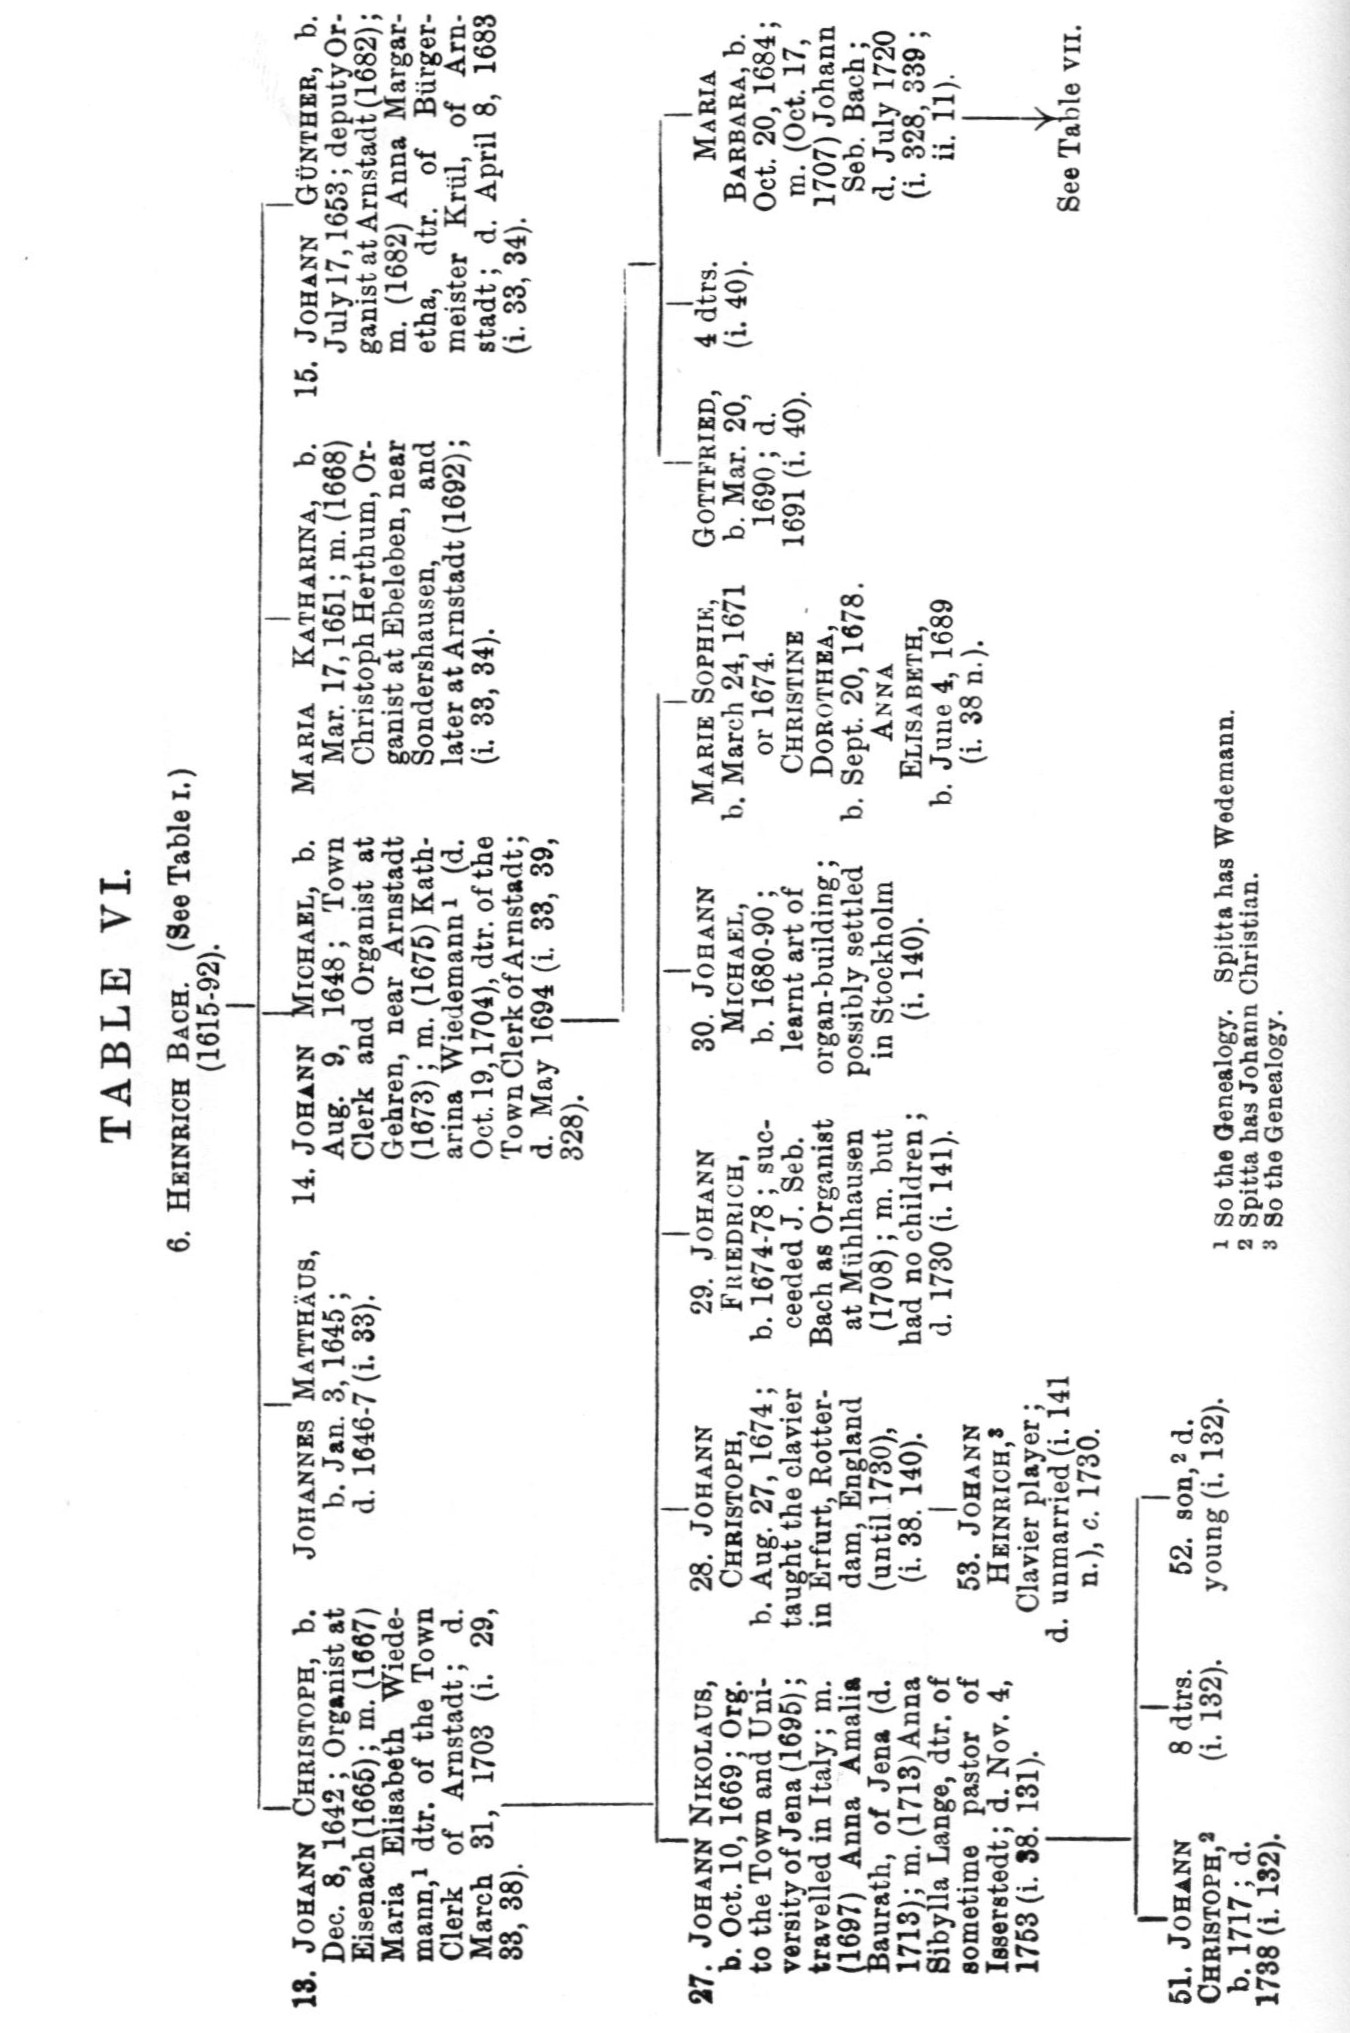 Genealogy Table, p. 308